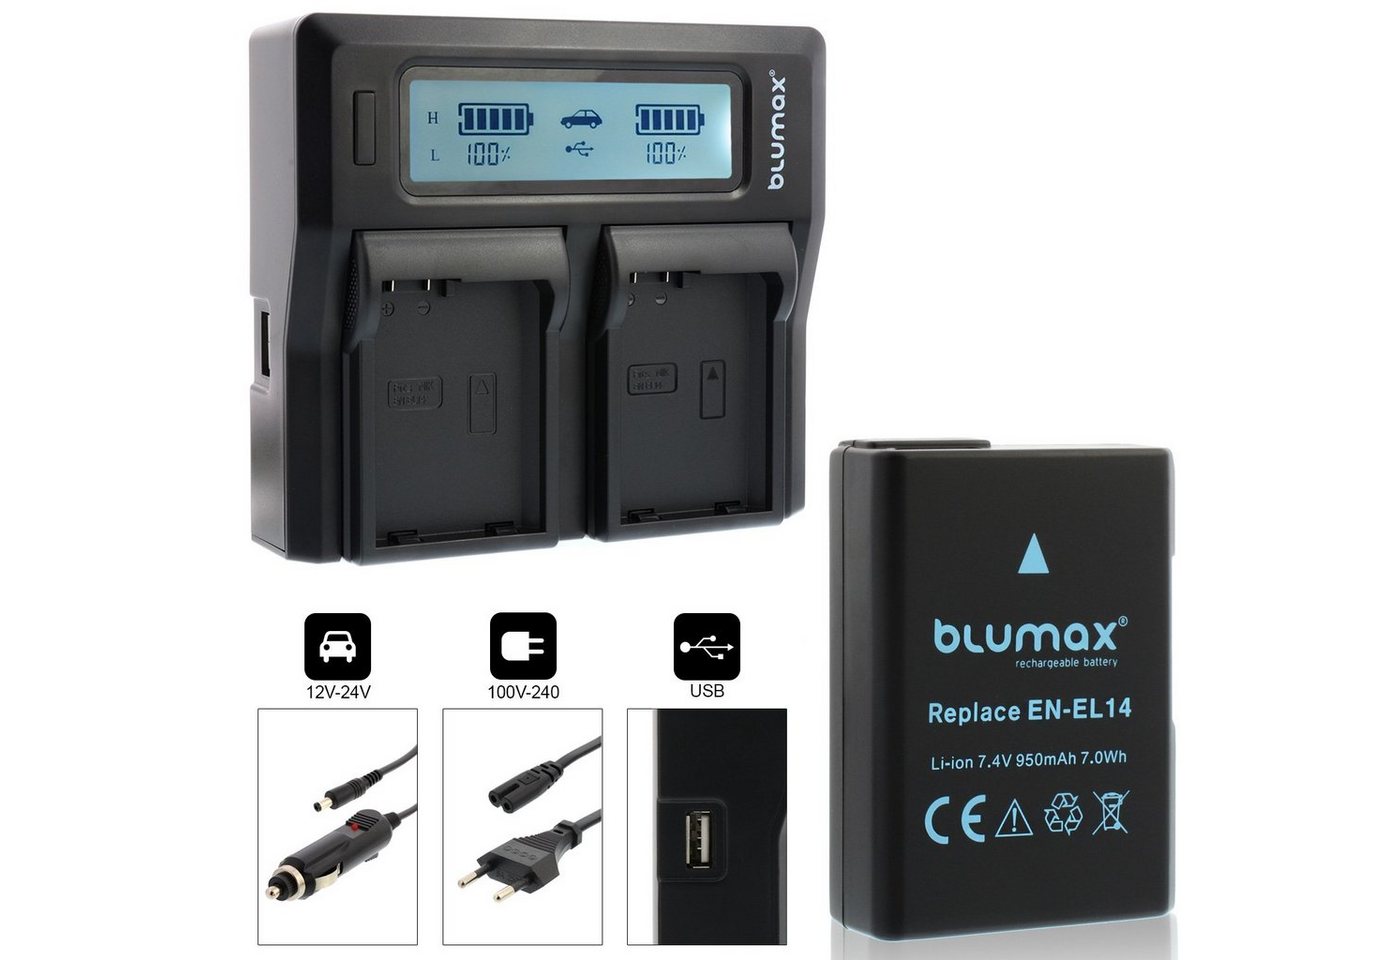 Blumax Set mit Laderr für Nikon EN-EL14 D5300 950 mAh Kamera-Ladegerät von Blumax